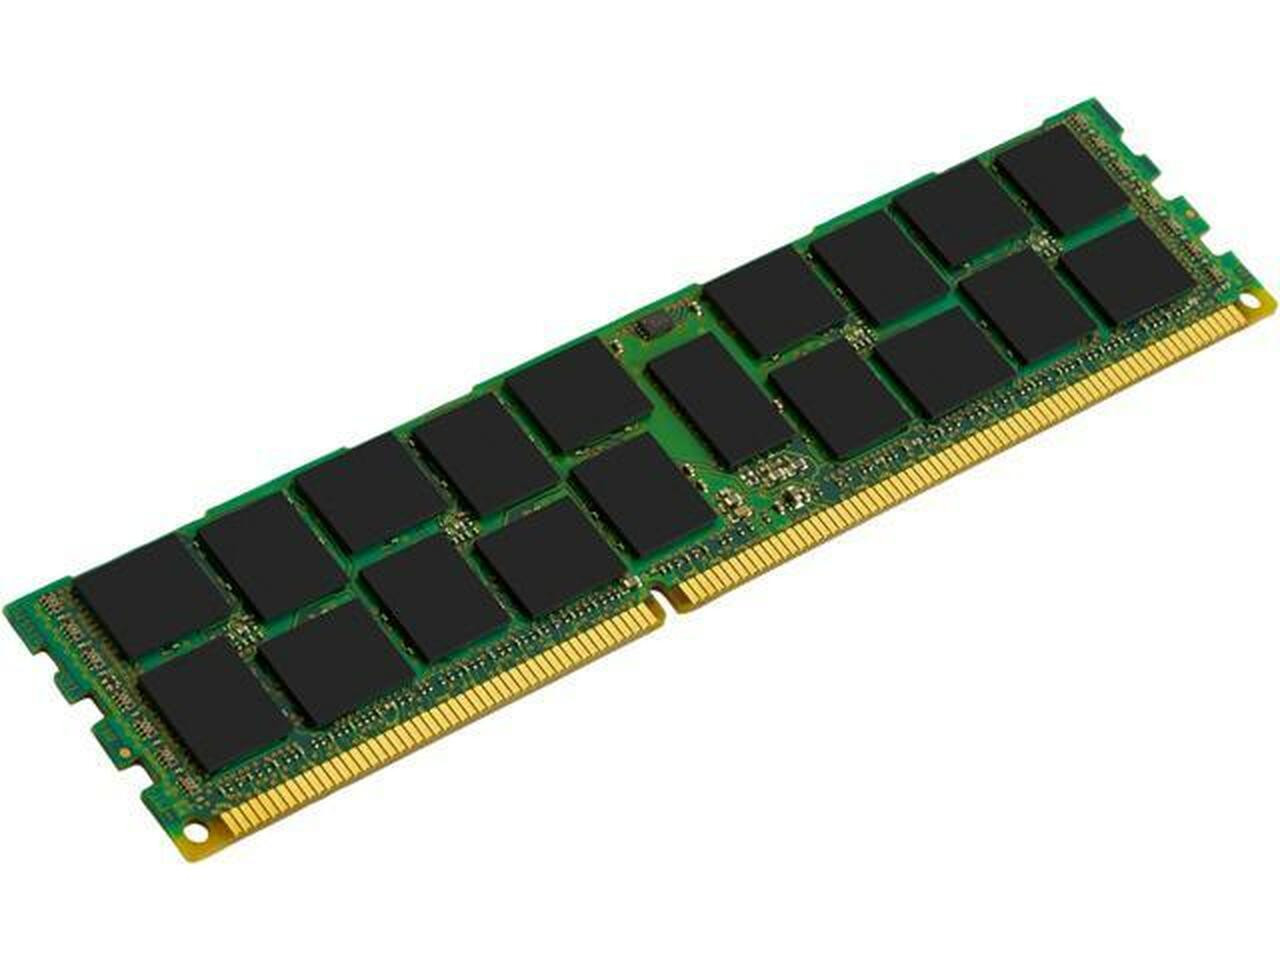 Netpatibles 8GB DDR3 SDRAM Memory Module - MEMDR380LSL05ER18NPM